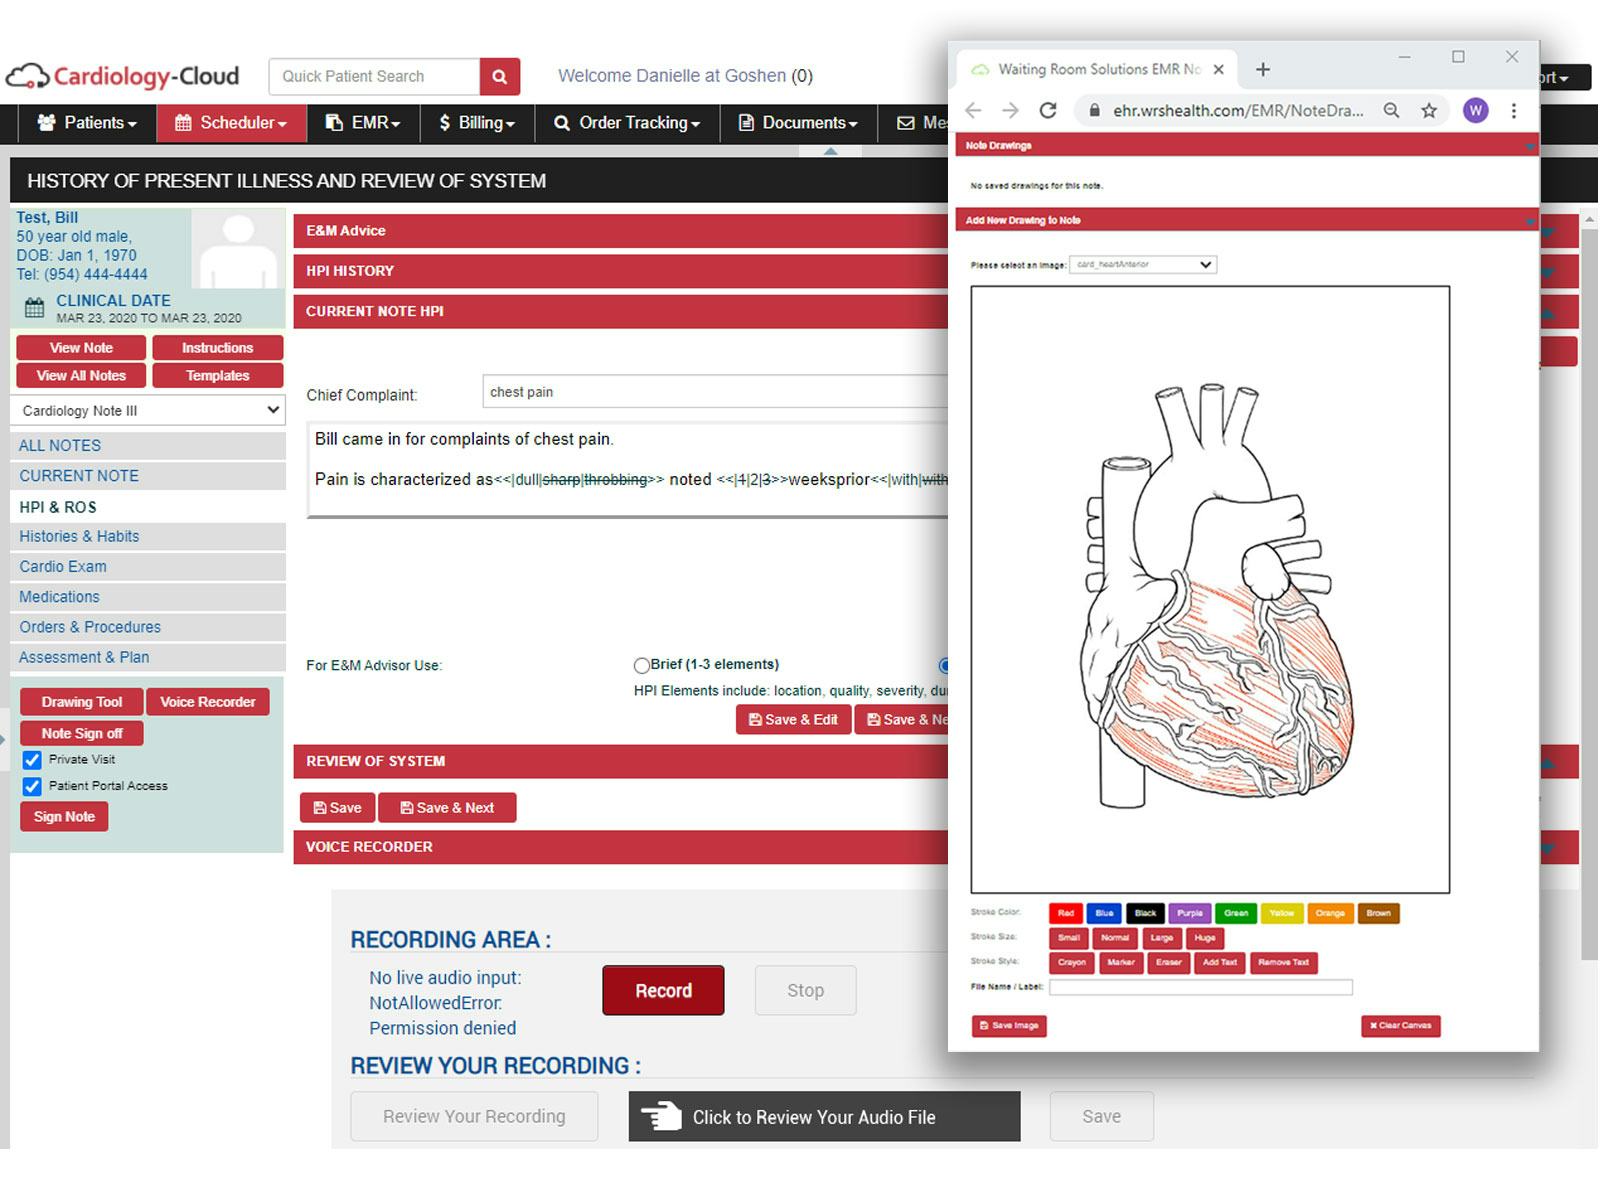 Cardiology-Cloud Software - Cardiology-Cloud HPI Drawing Tool